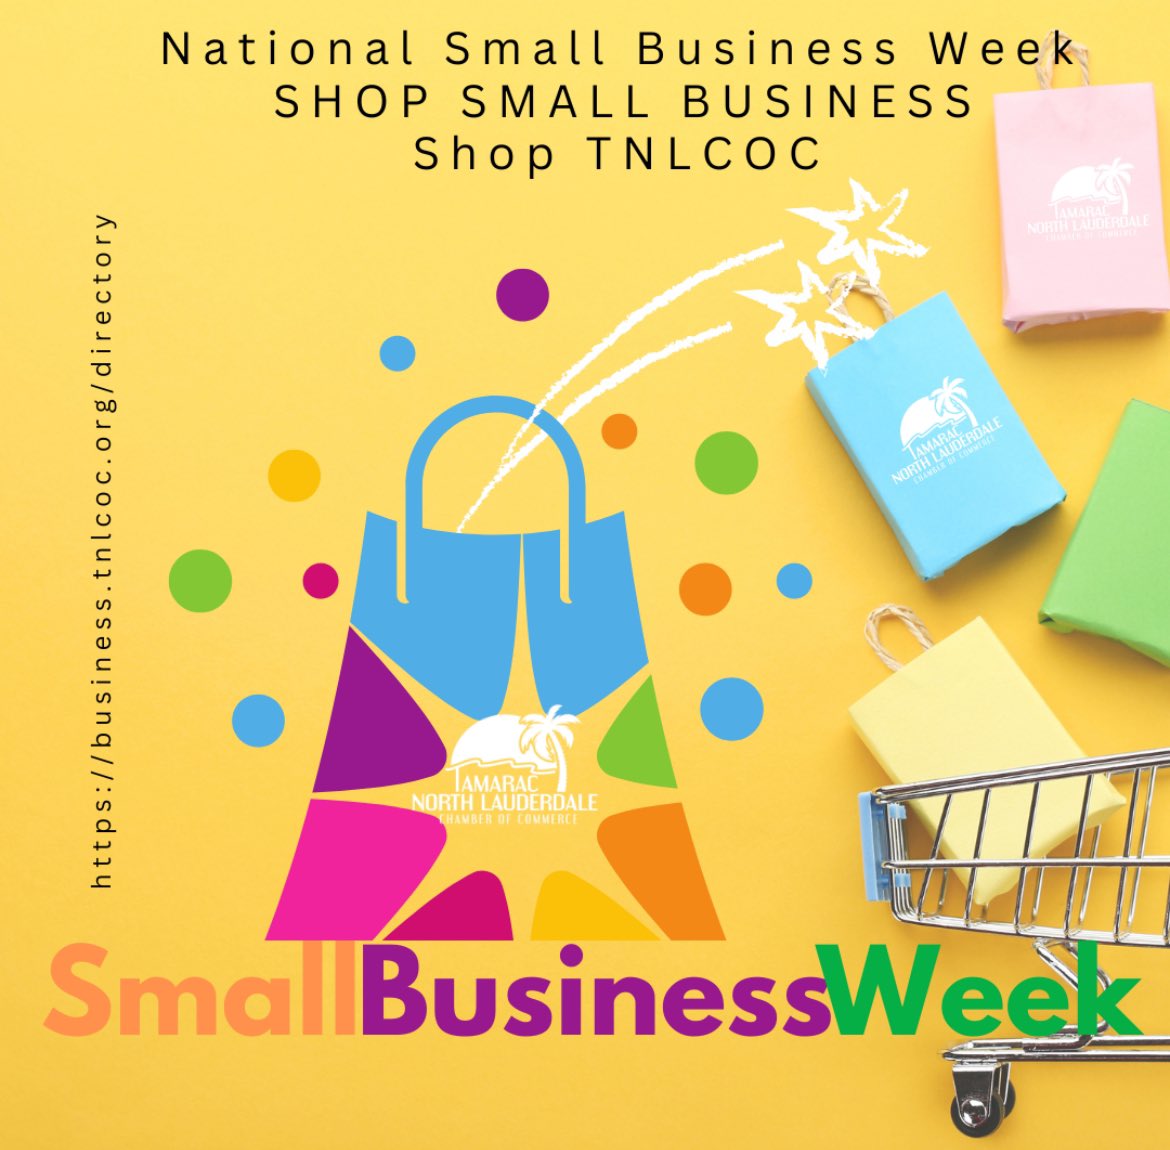 Take advantage of this virtual summit - National Small Business Week
vevents.virtualtradeshowhosting.com/event/NSBWVirt…
@CityofTamarac @TamaracTalk 
#tamarac #northlauderdale 
#shoplocal